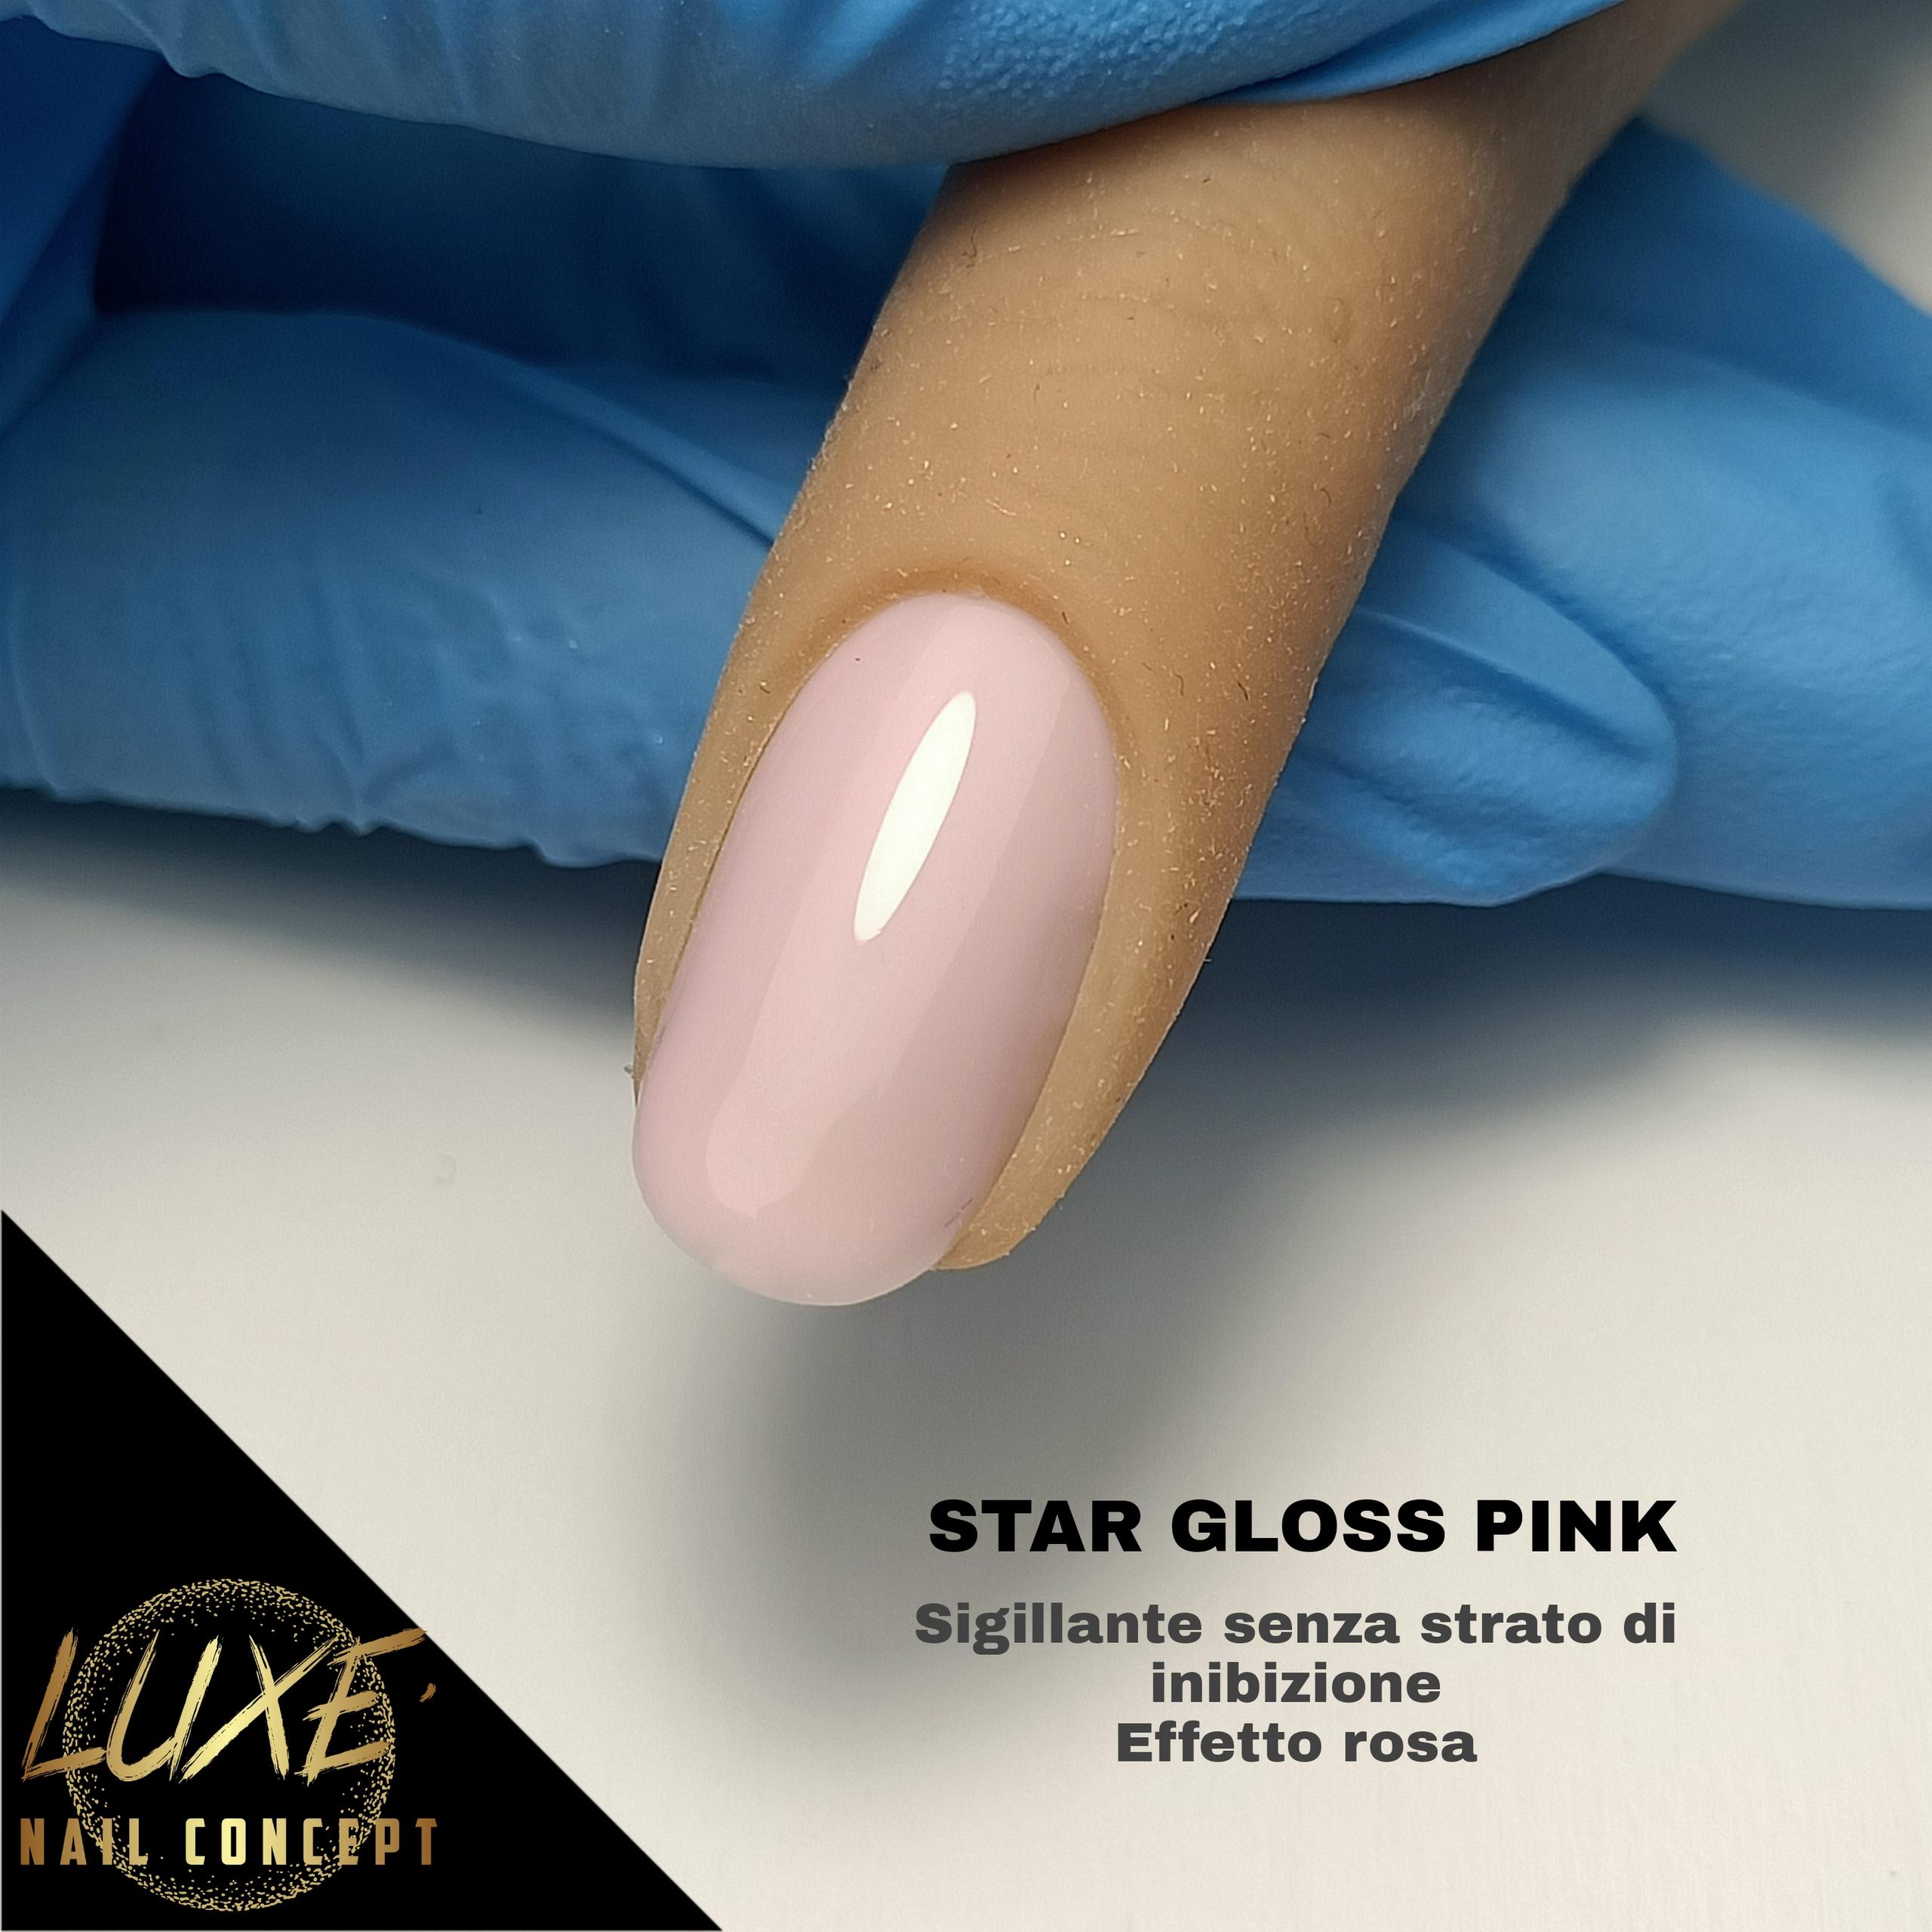 Star Gloss Pink